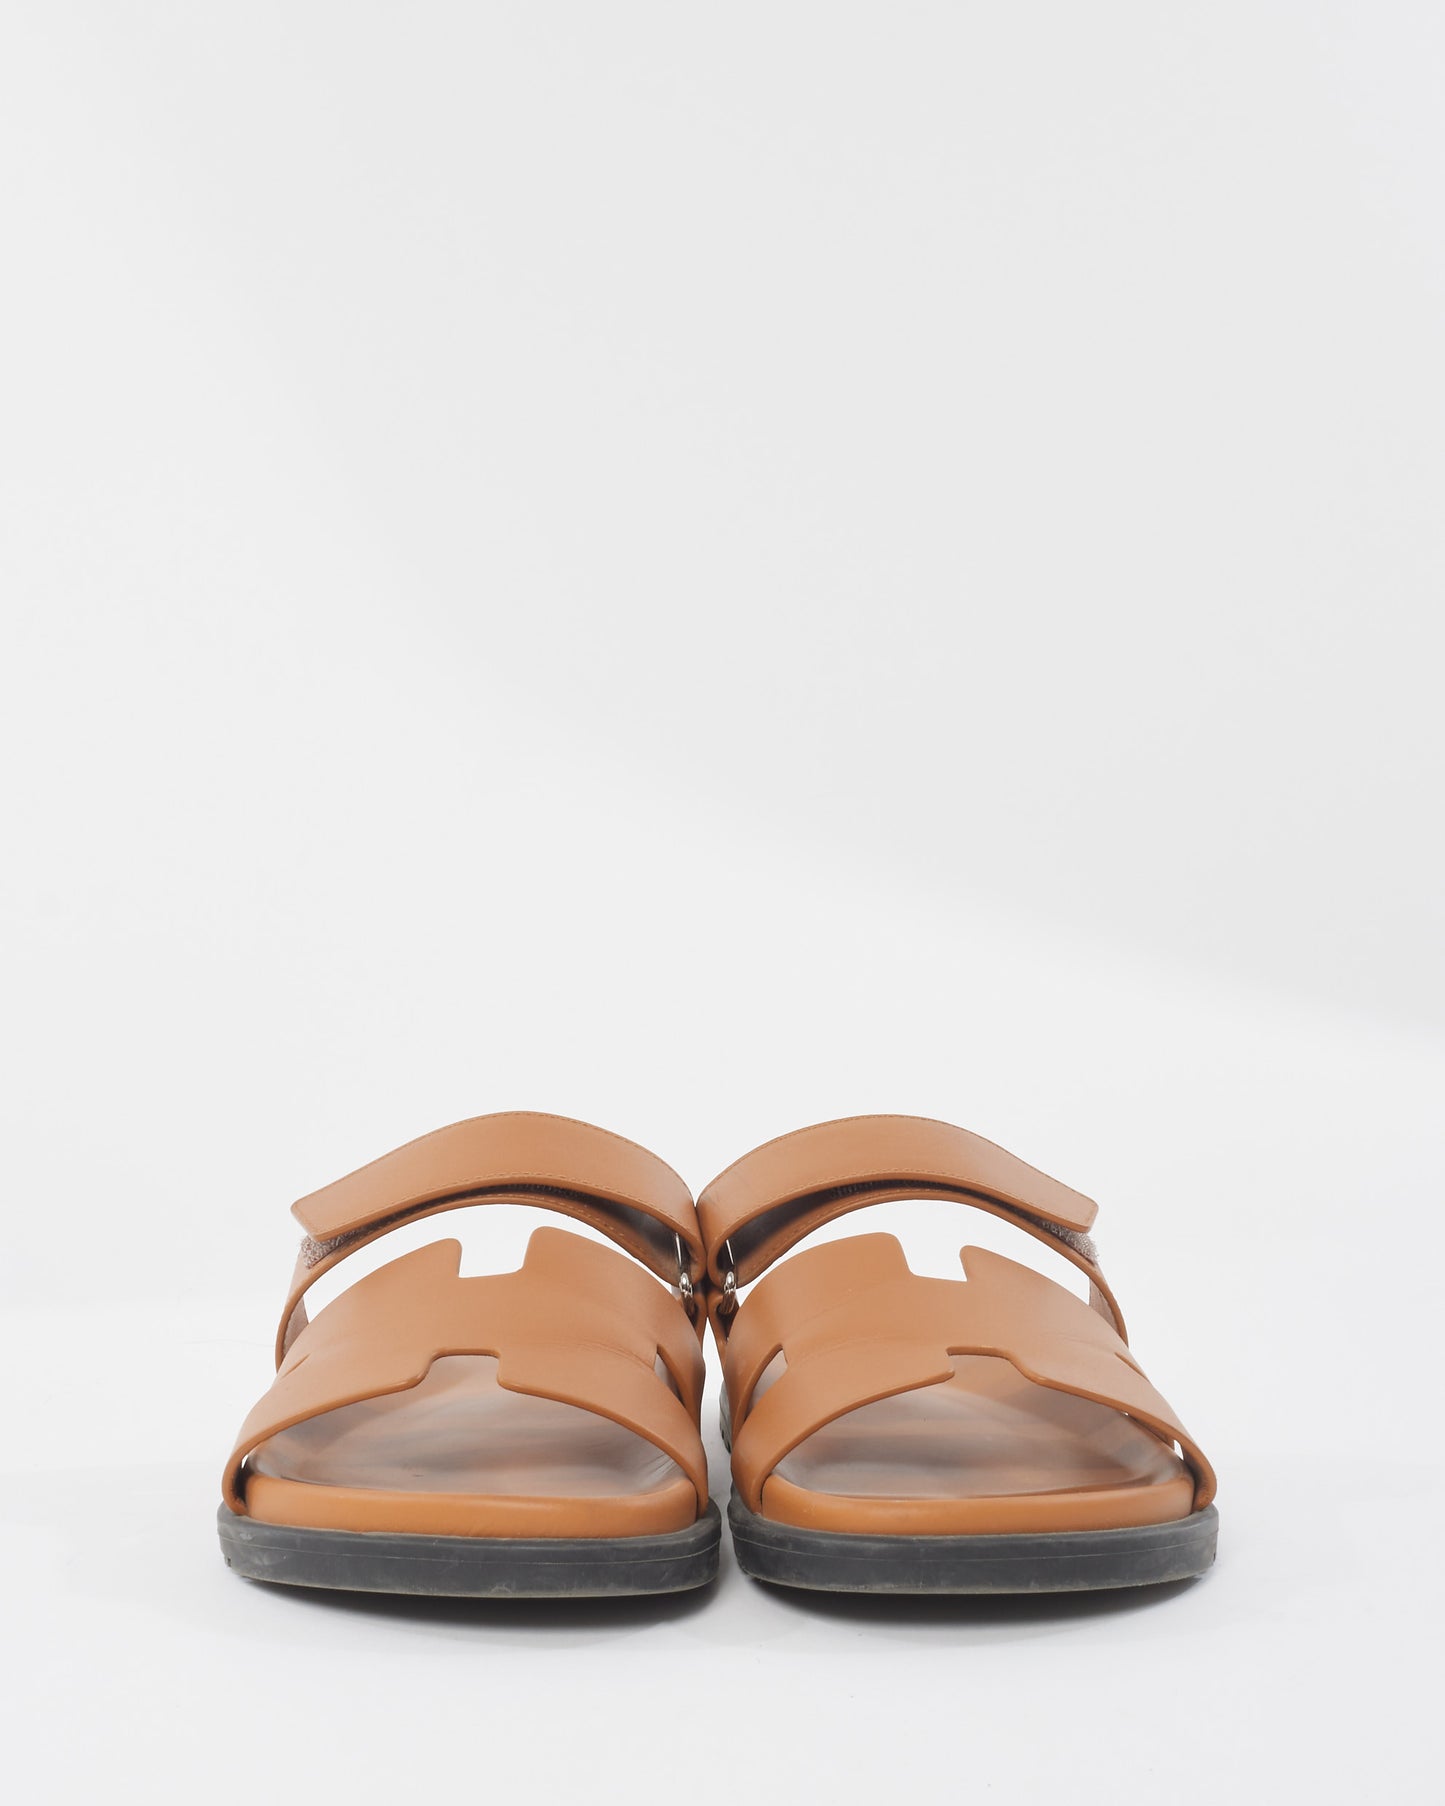 Hermès Gold Leather Chypre Sandals - 41